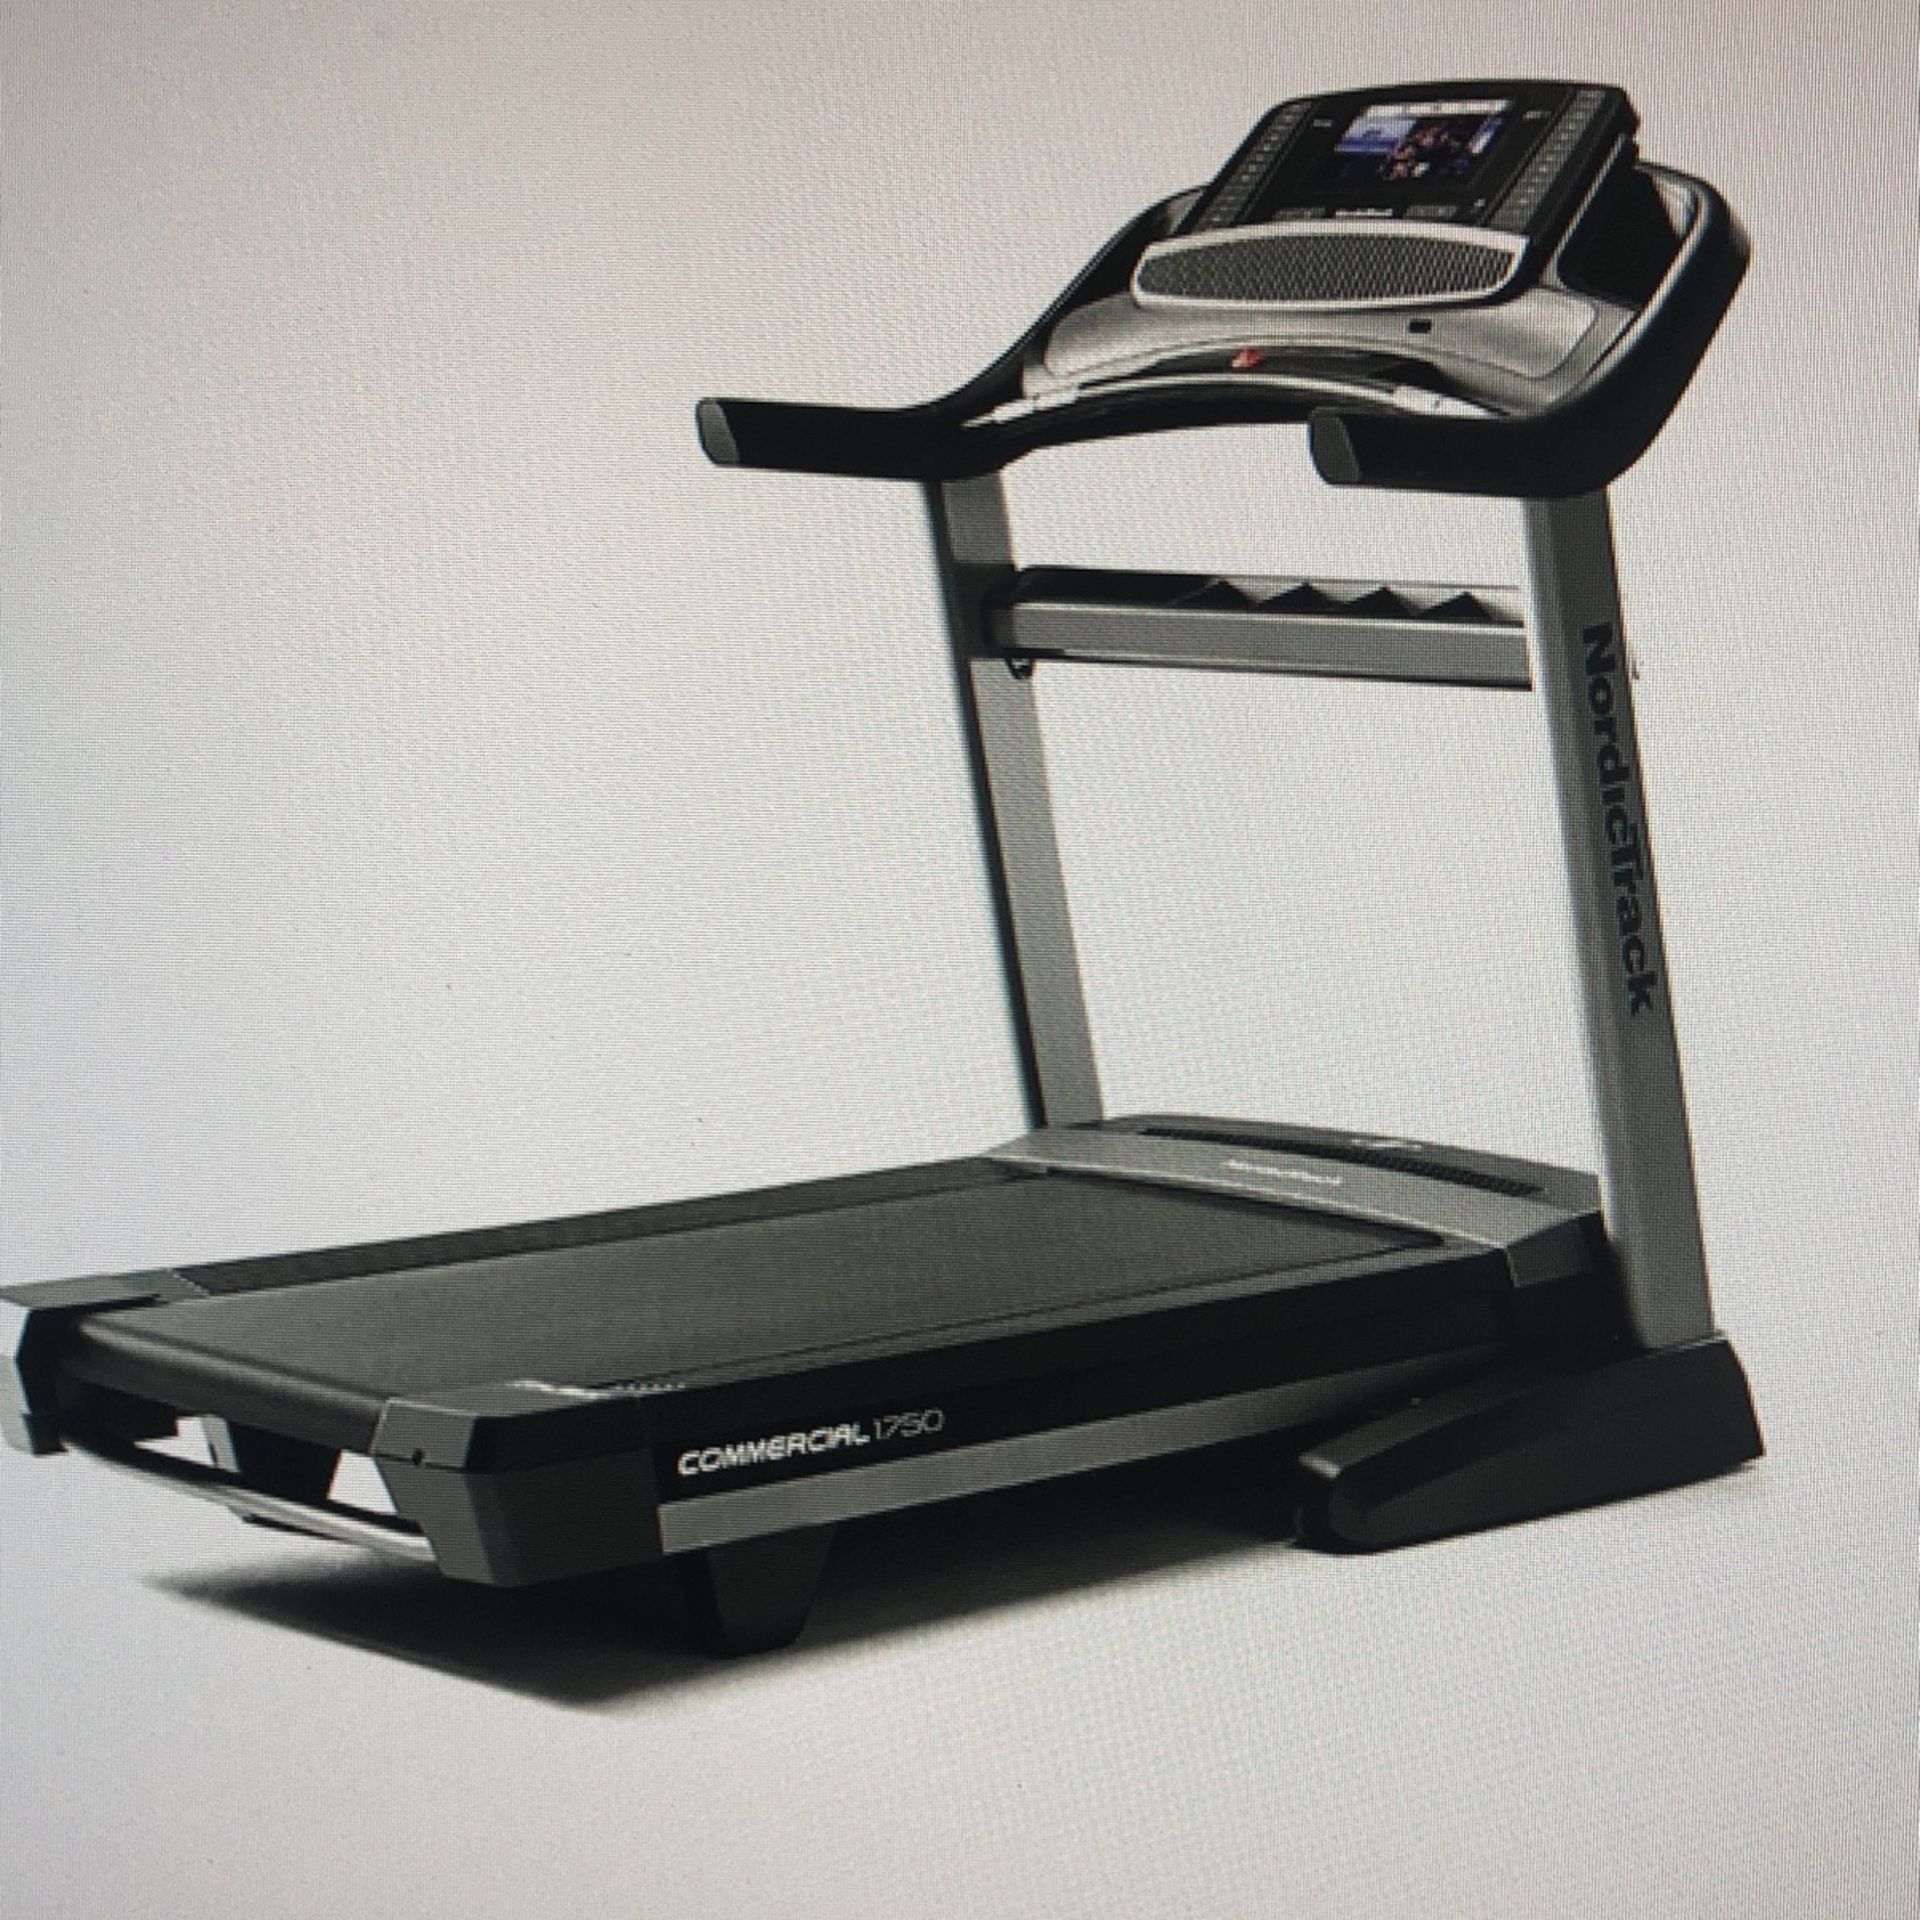 Treadmill - NordicTrack Commercial 1750 Treadmill - LIKE NEW!